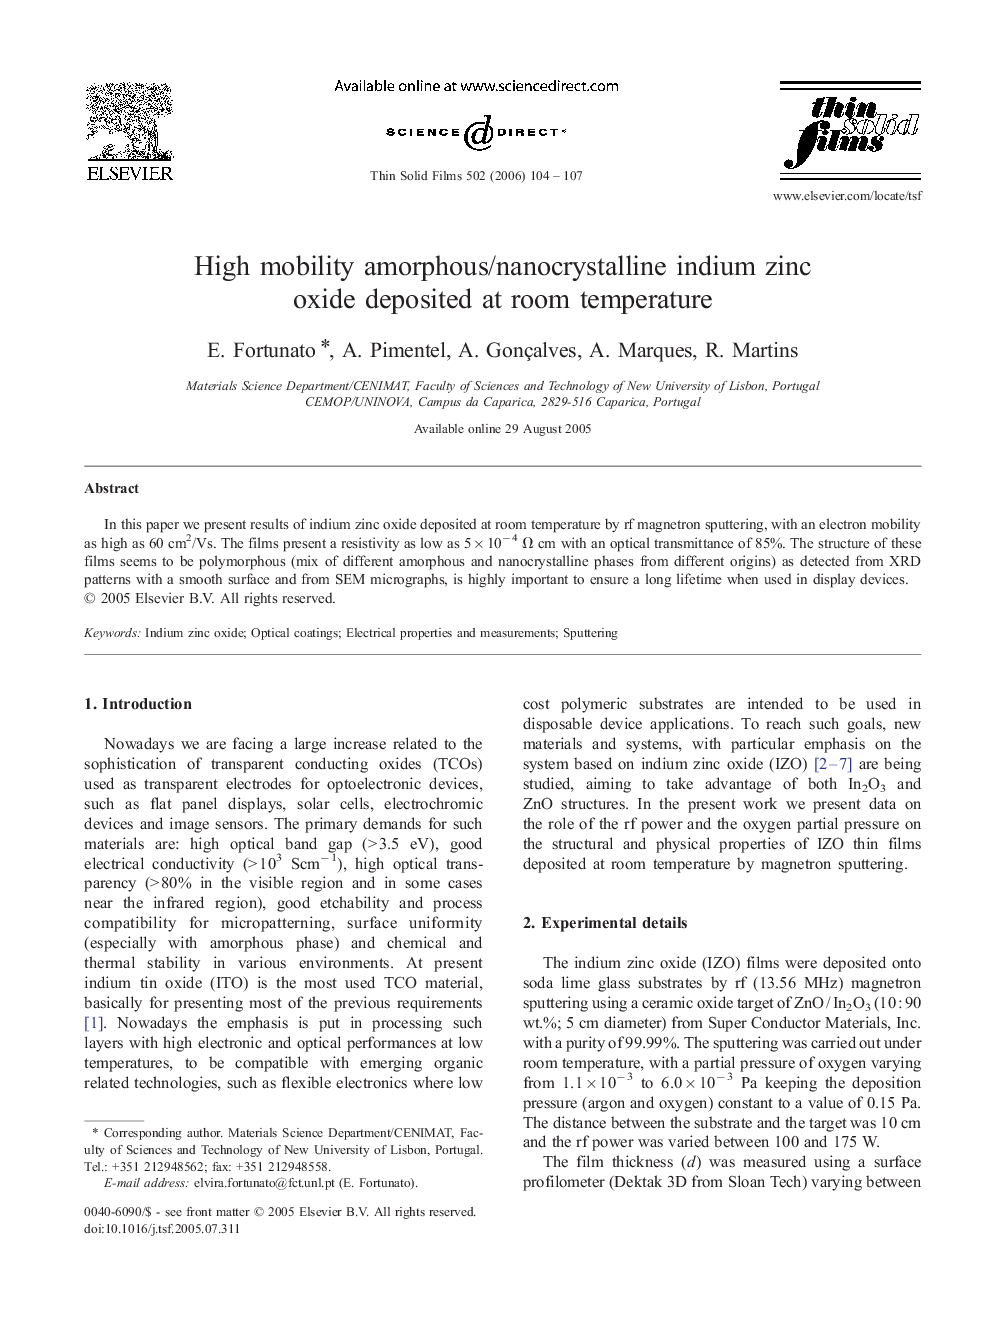 High mobility amorphous/nanocrystalline indium zinc oxide deposited at room temperature